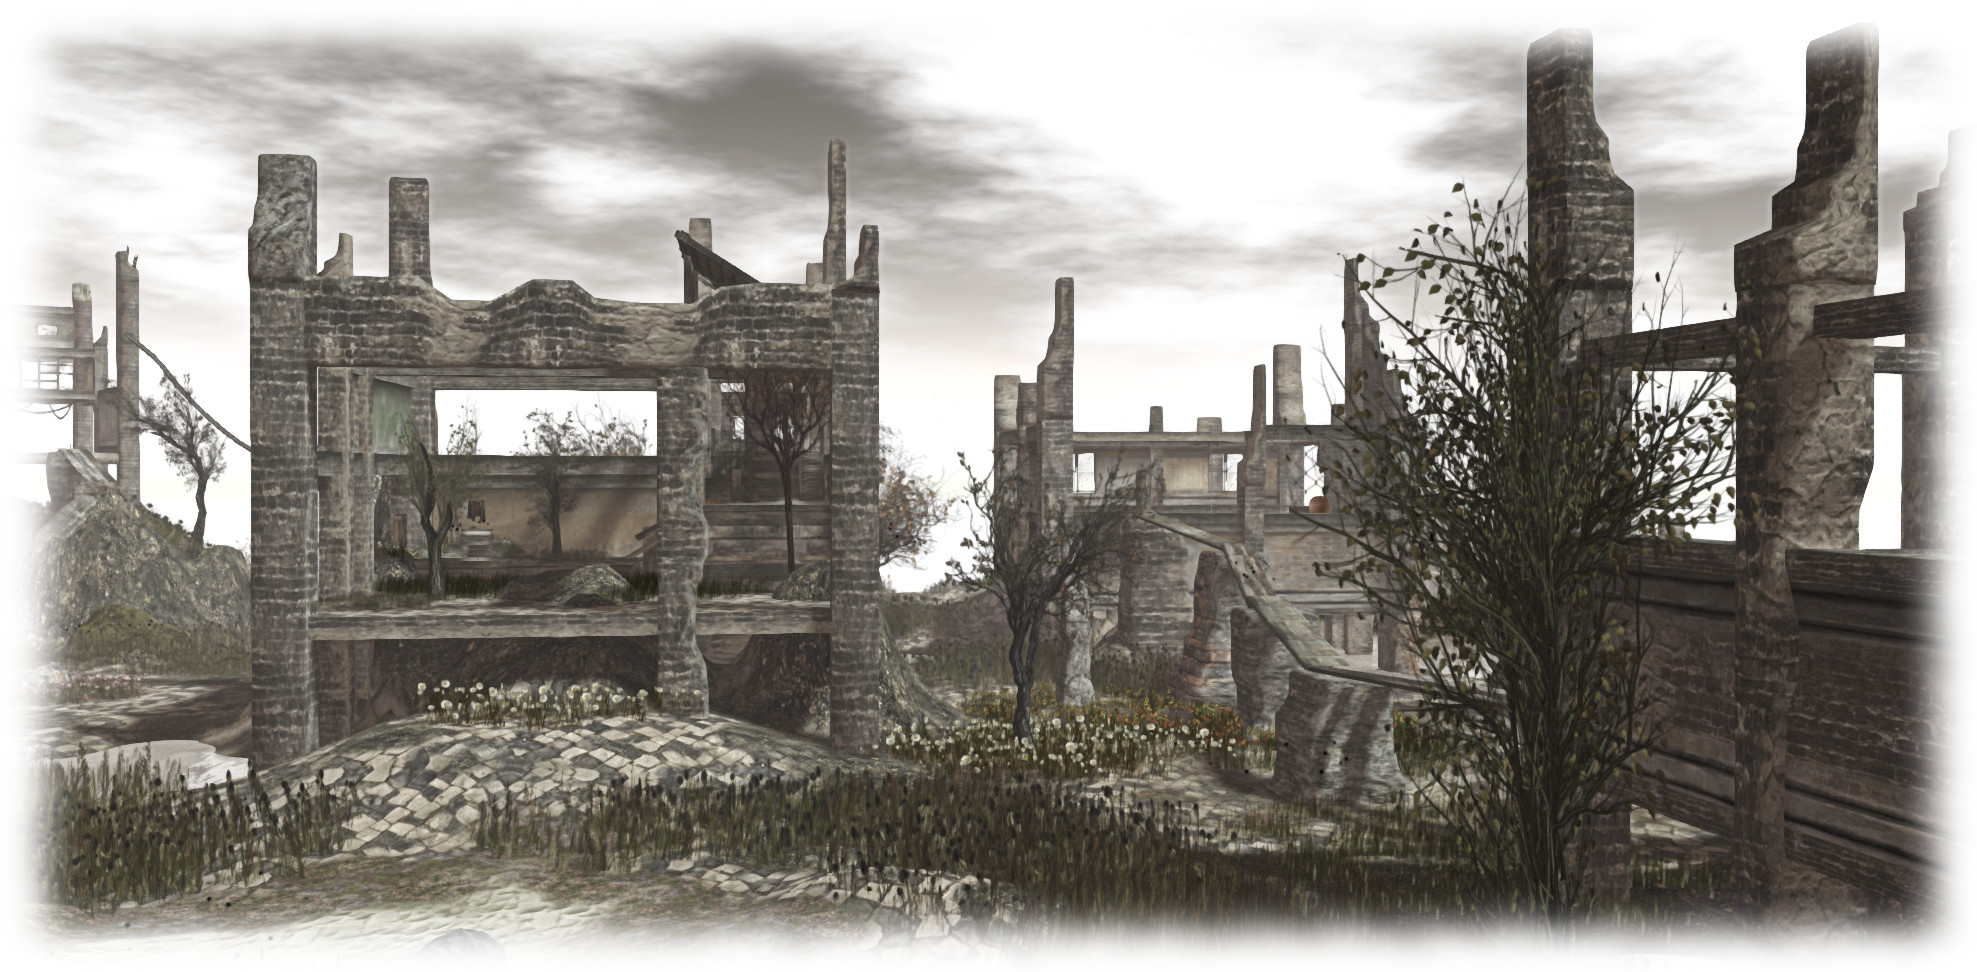 Ruins, Wondering Dew; Inara Pey, March 2015, on Flickr